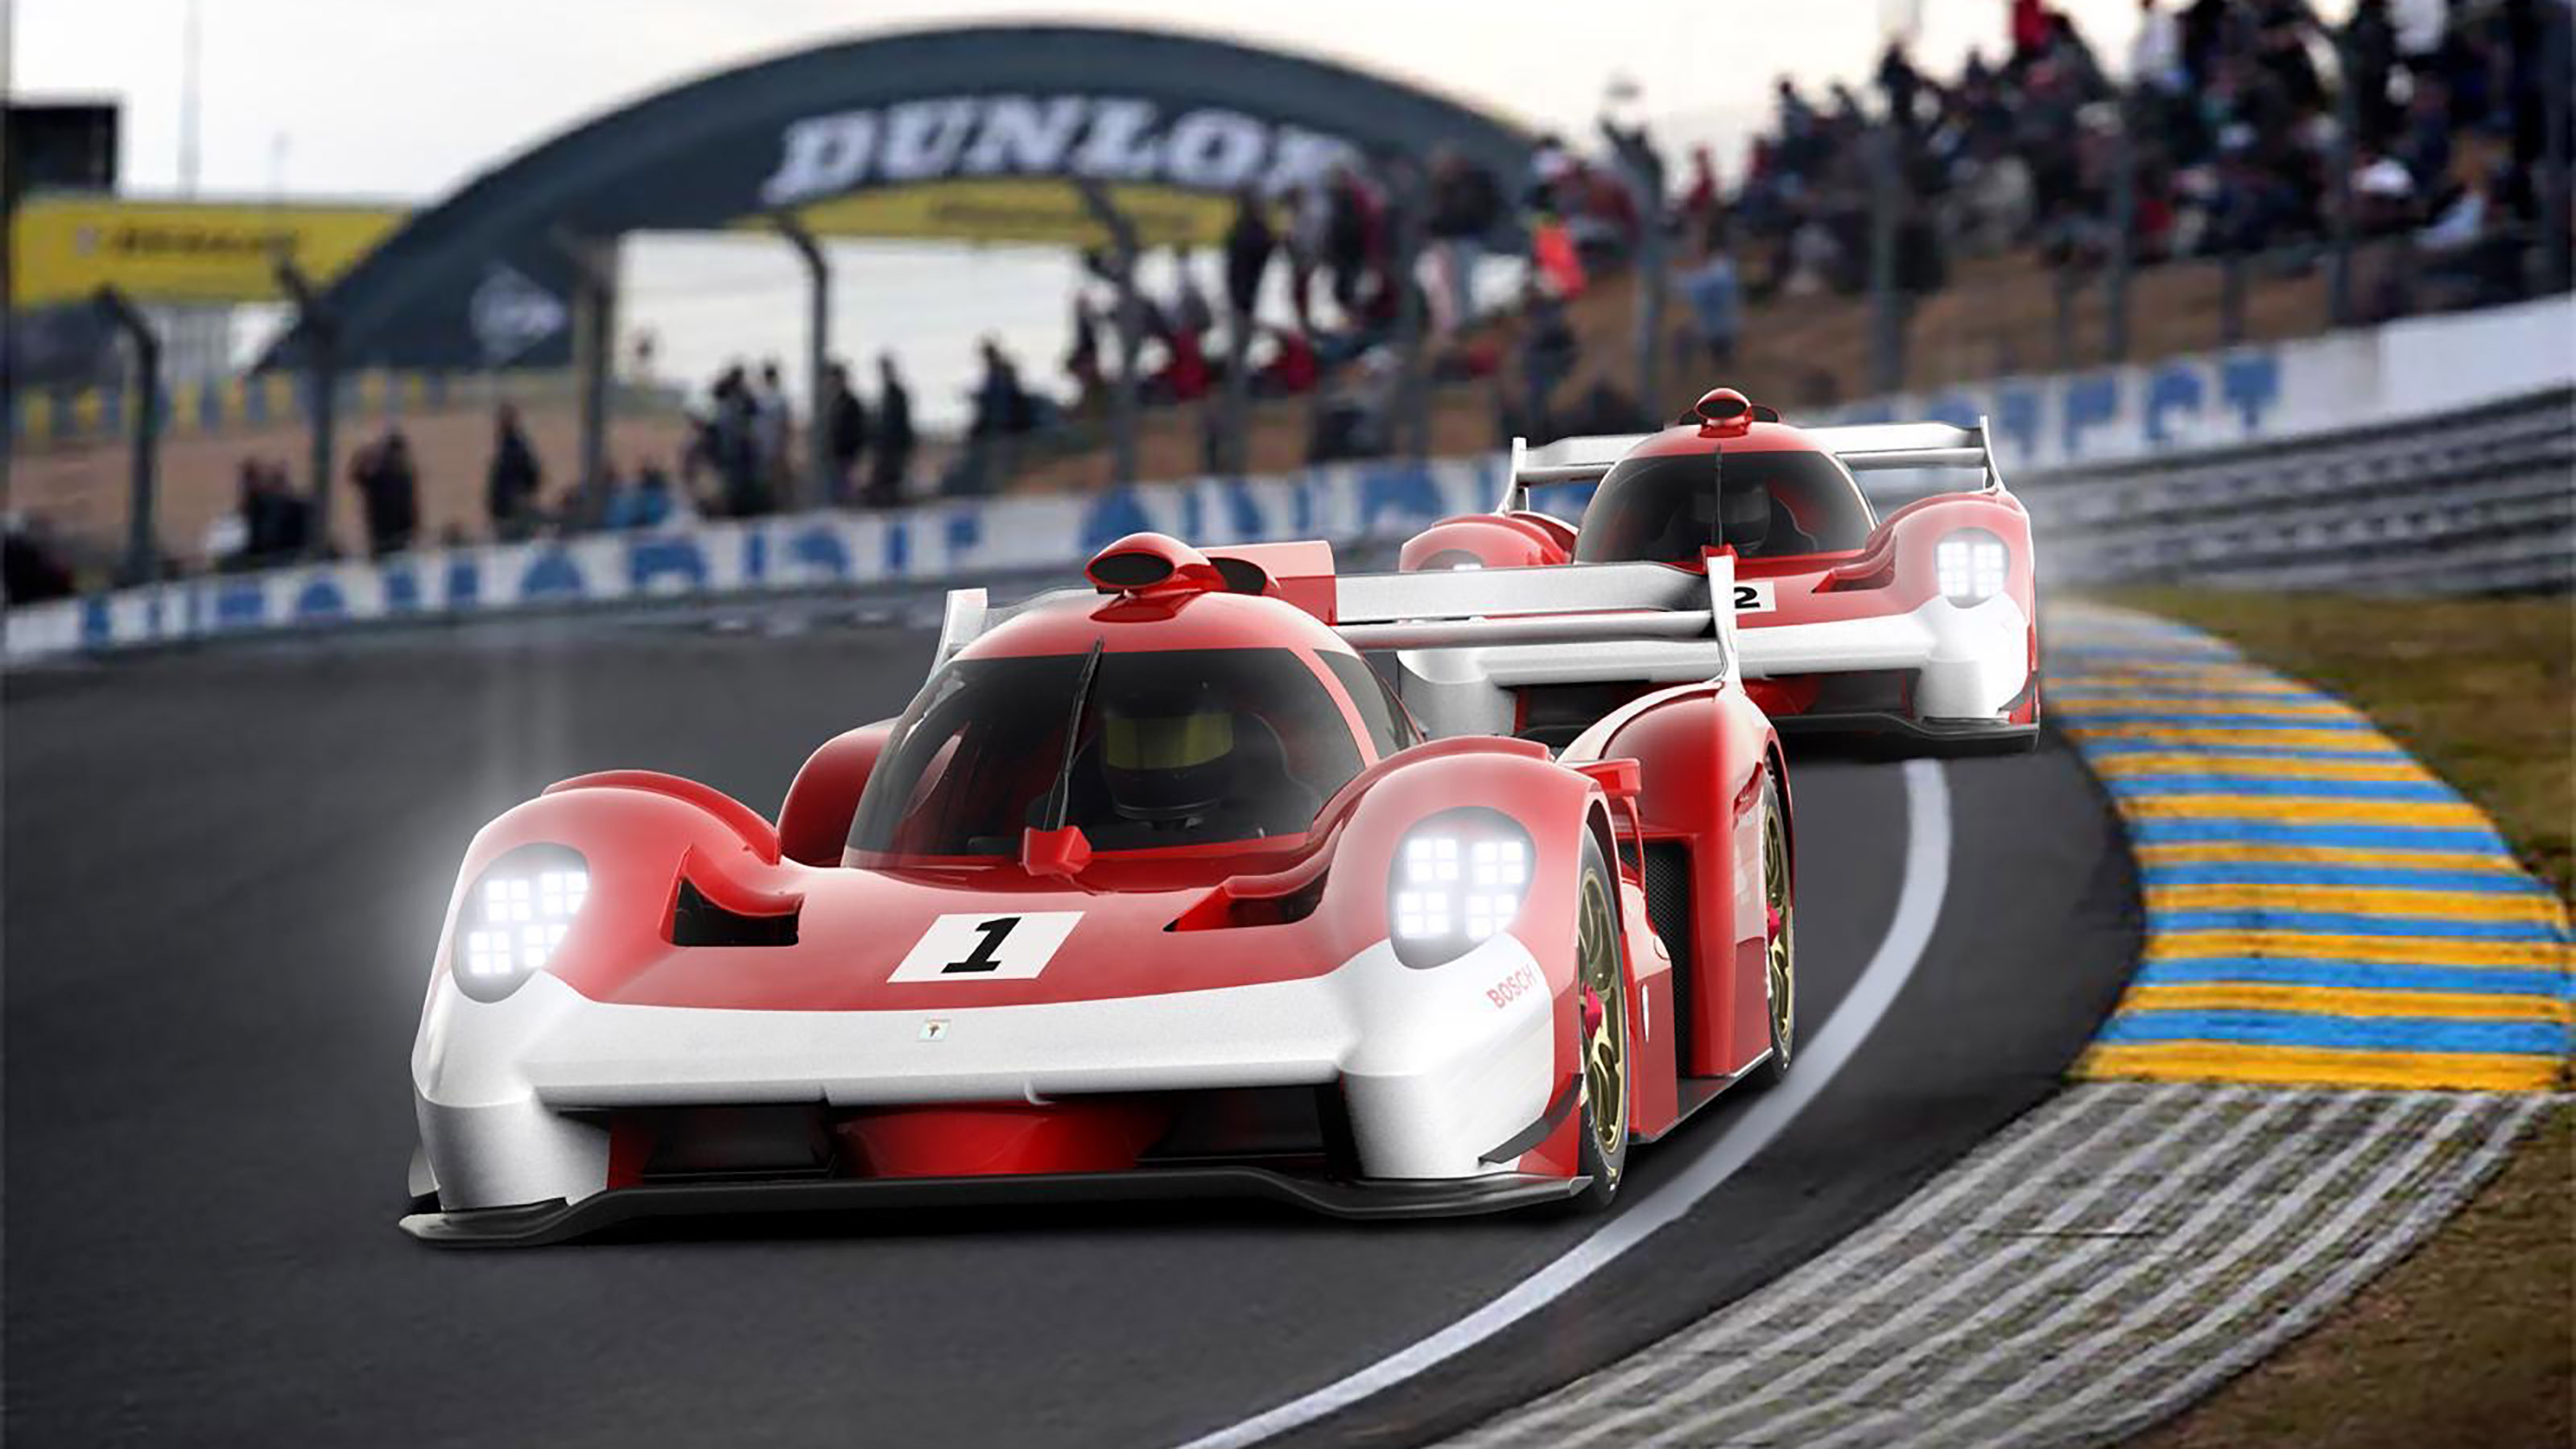 Glickenhaus 007 Le Mans hypercar to receive twinturbocharged V8 evo